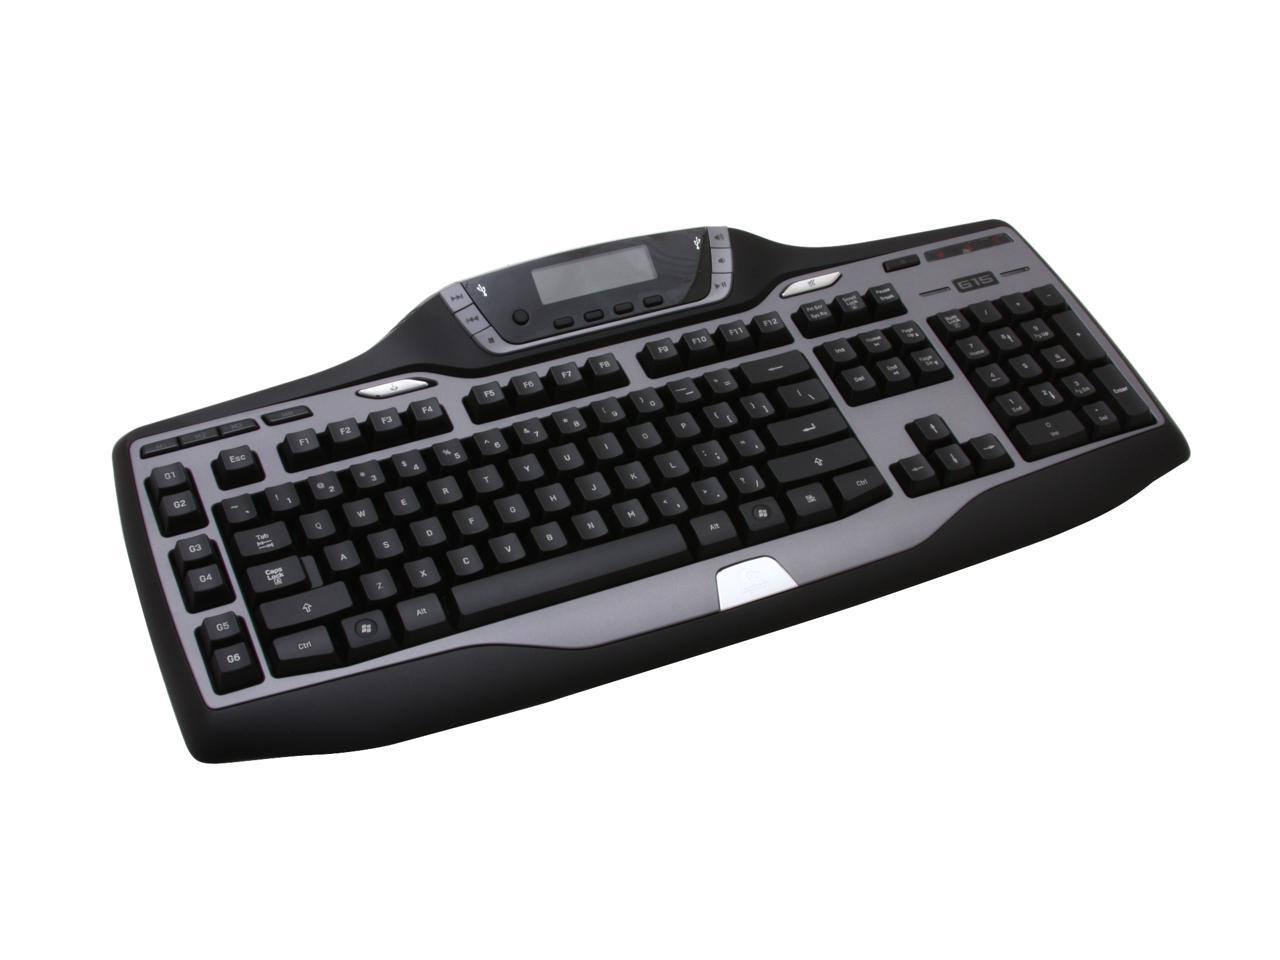 Logitech G15 2-Tone Wired Gaming Keyboard Newegg.com